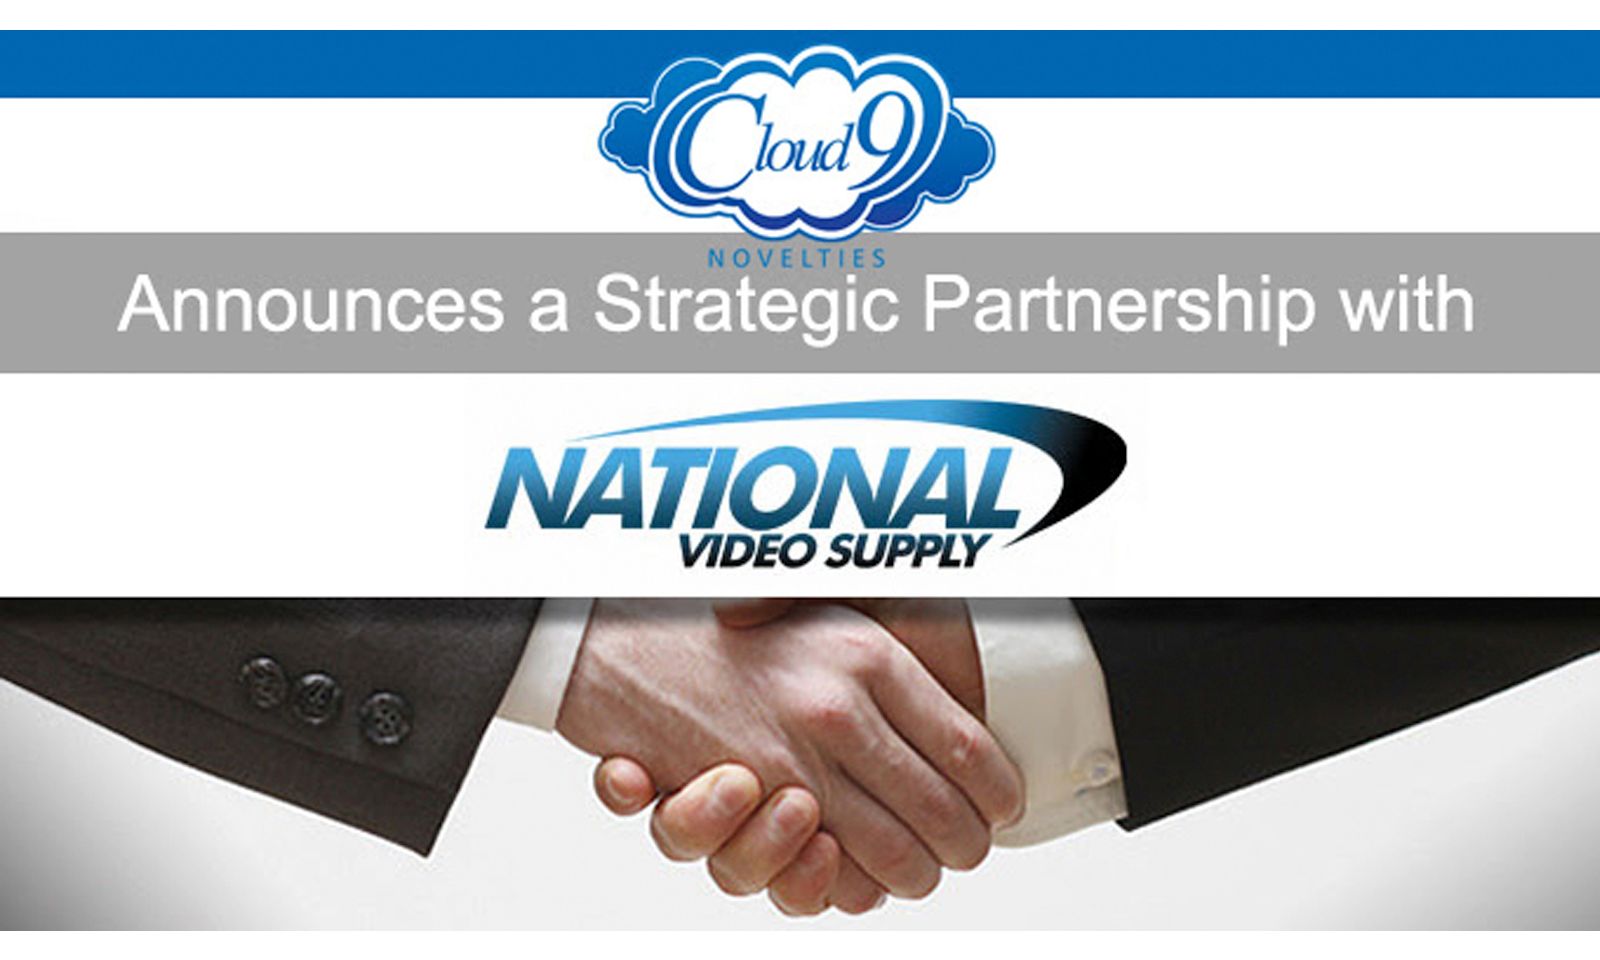 Cloud 9, National Video Form Strategic Partnership